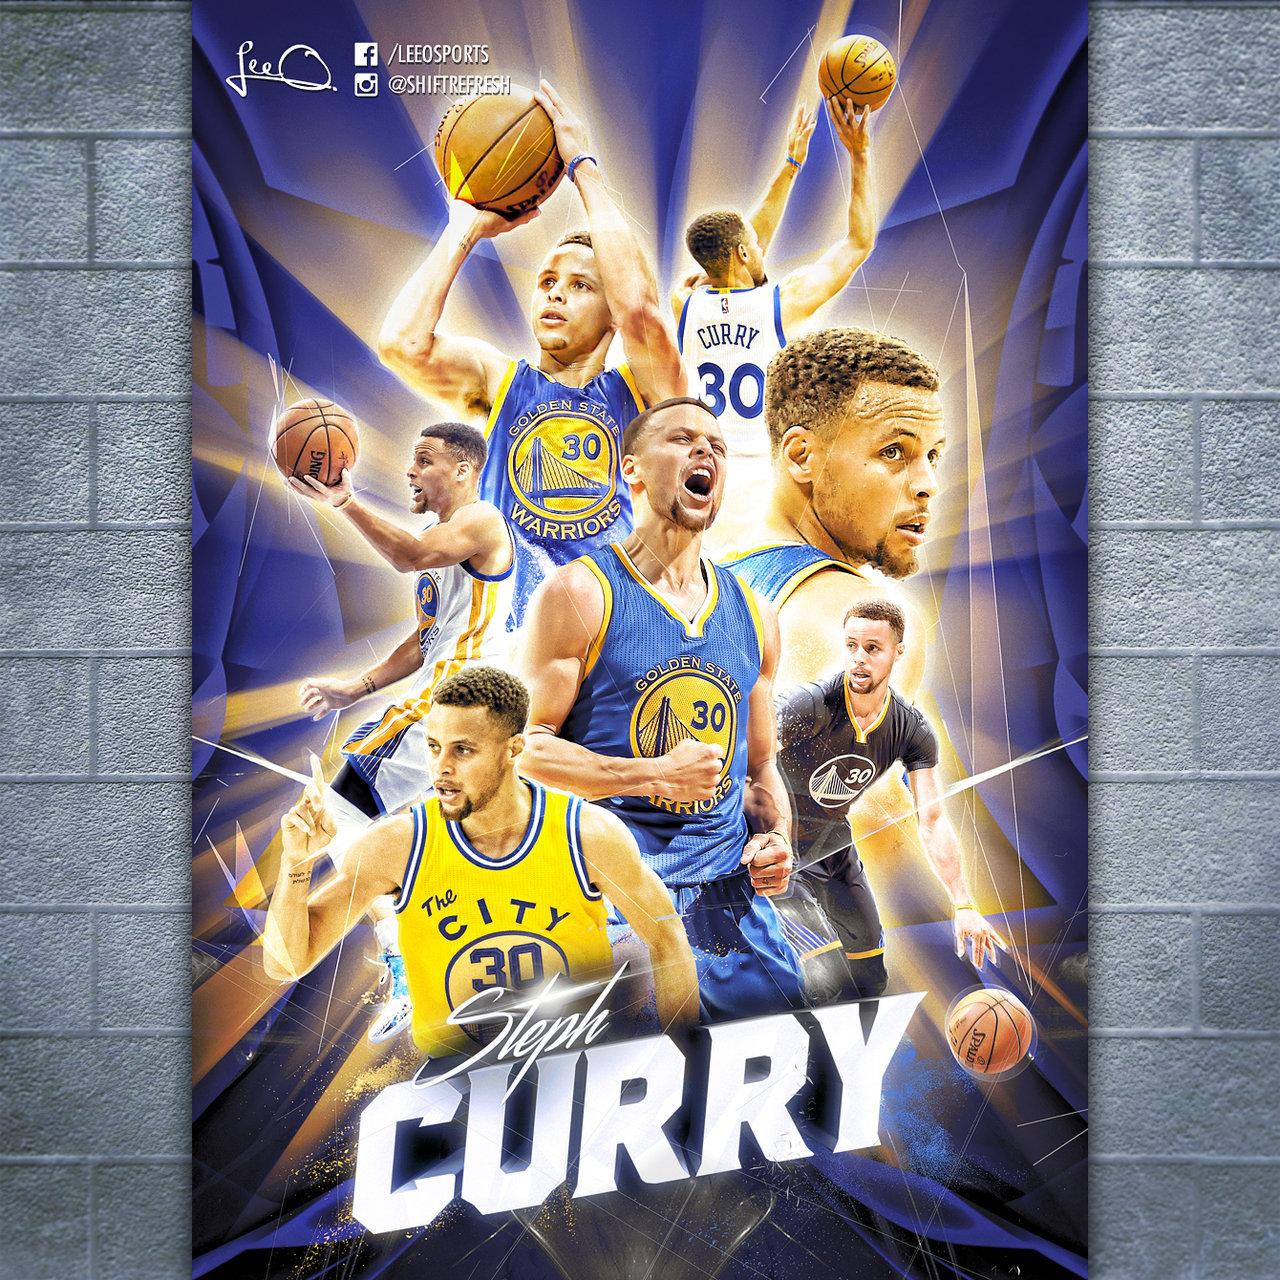 Steph Curry Splash iPhone Wallpaper by mjgraffixx on DeviantArt